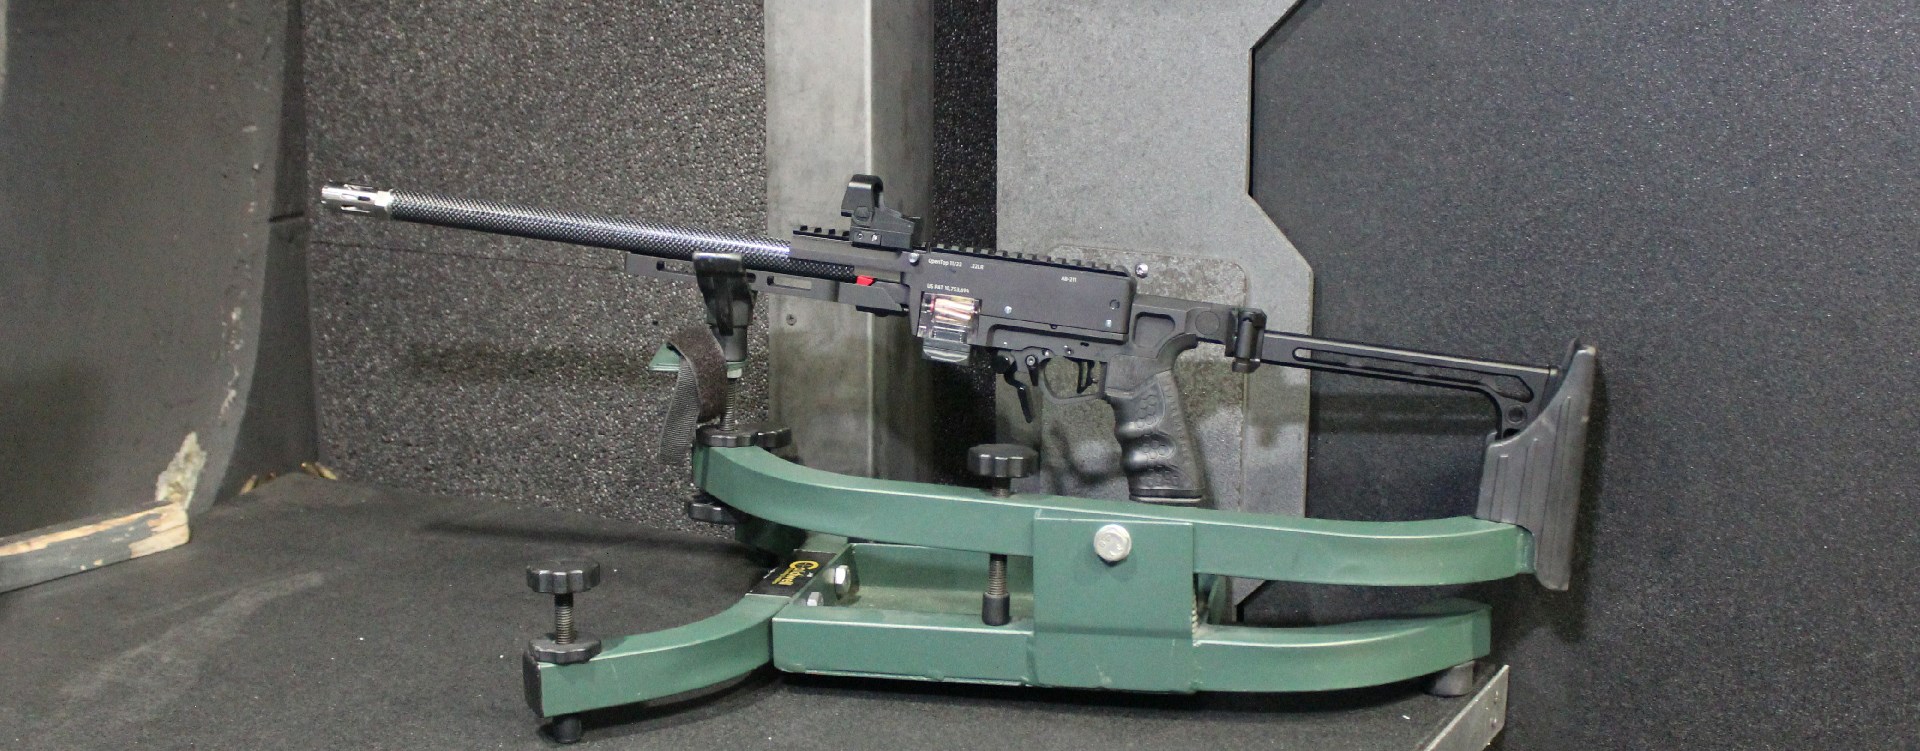 Custom rifle in cradle at indoor shooting range.